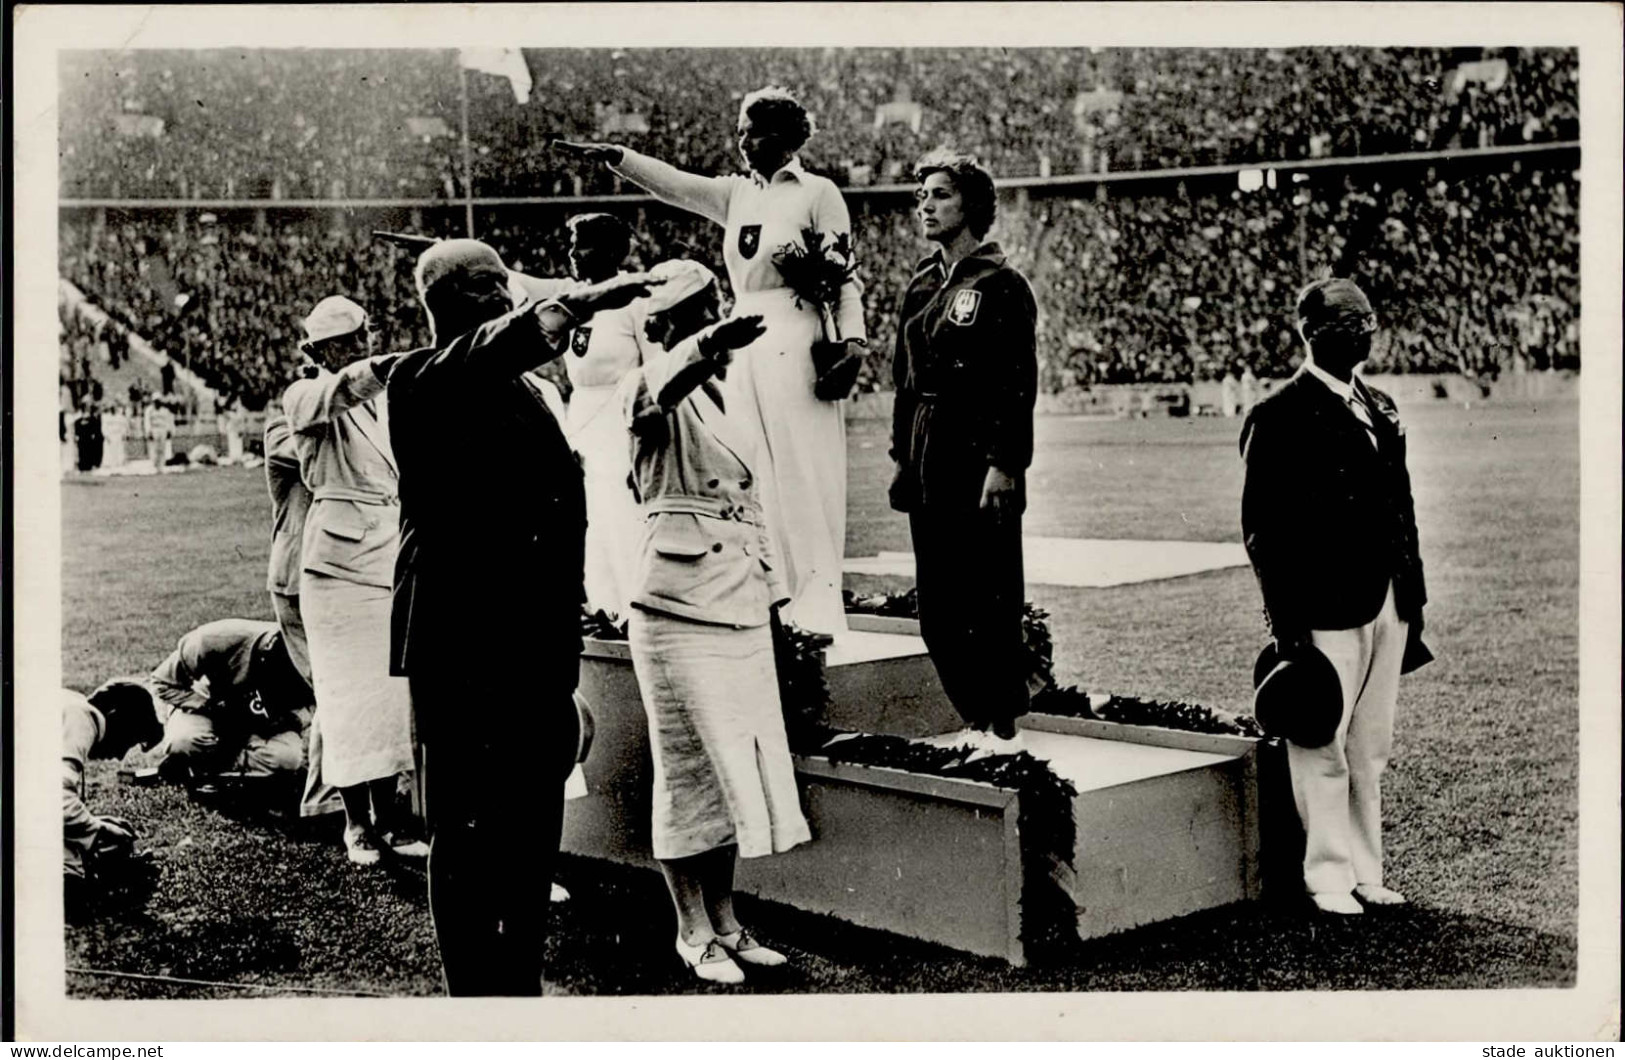 BERLIN OLYMPIA 1936 WK II - PH O 25die Erste Goldmedaille Für Deutschland - Sieger-Ehrung S-o I-II - Olympic Games